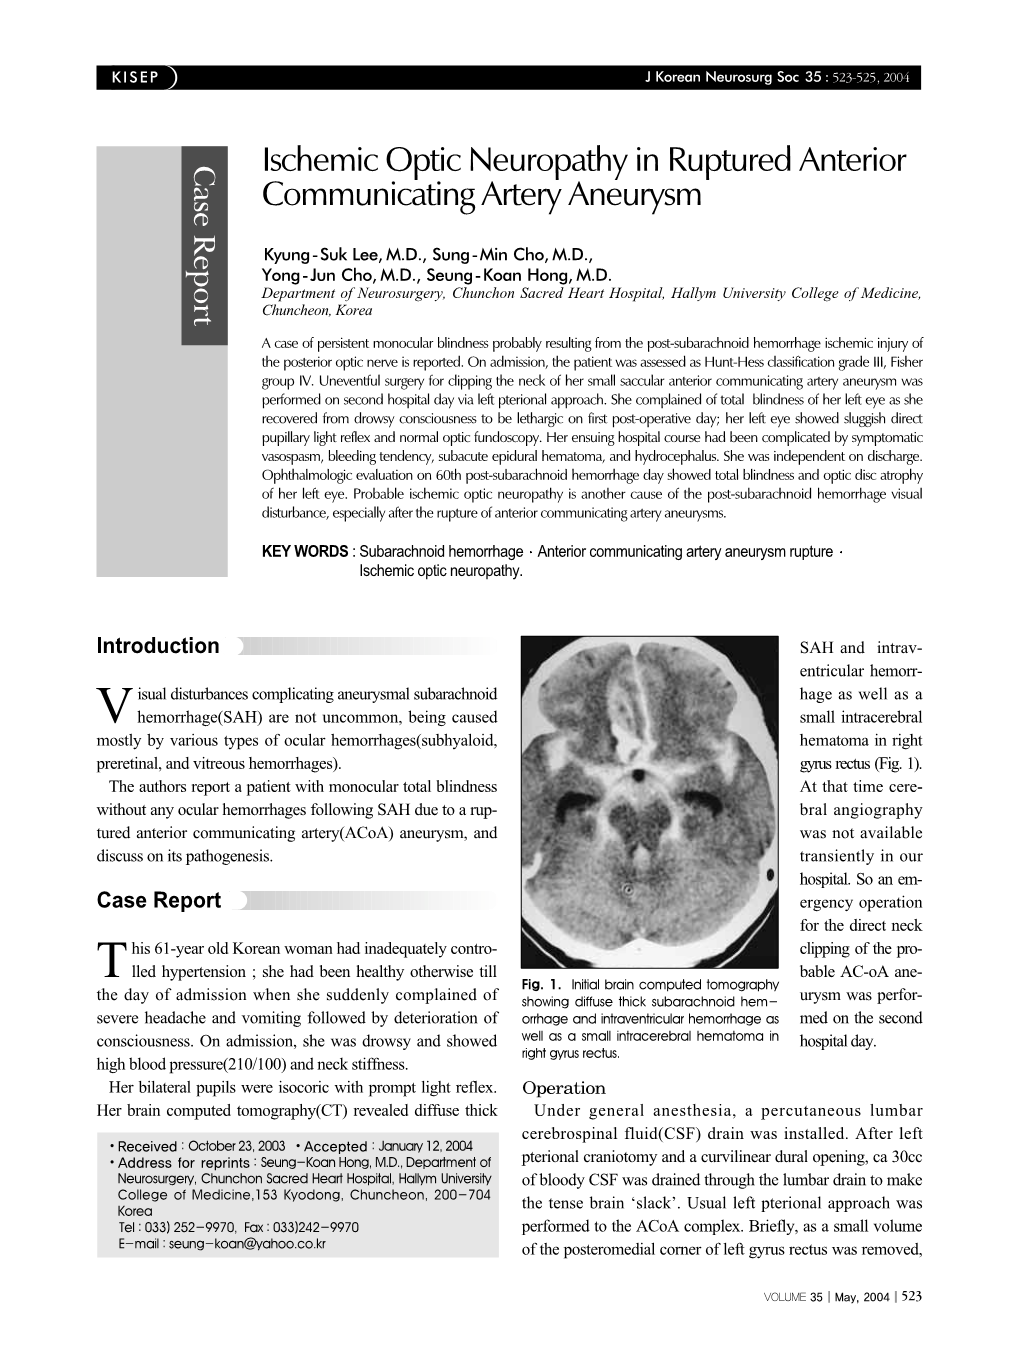 Ischemic Optic Neuropathy in Ruptured Anterior Communicating Artery Aneurysm